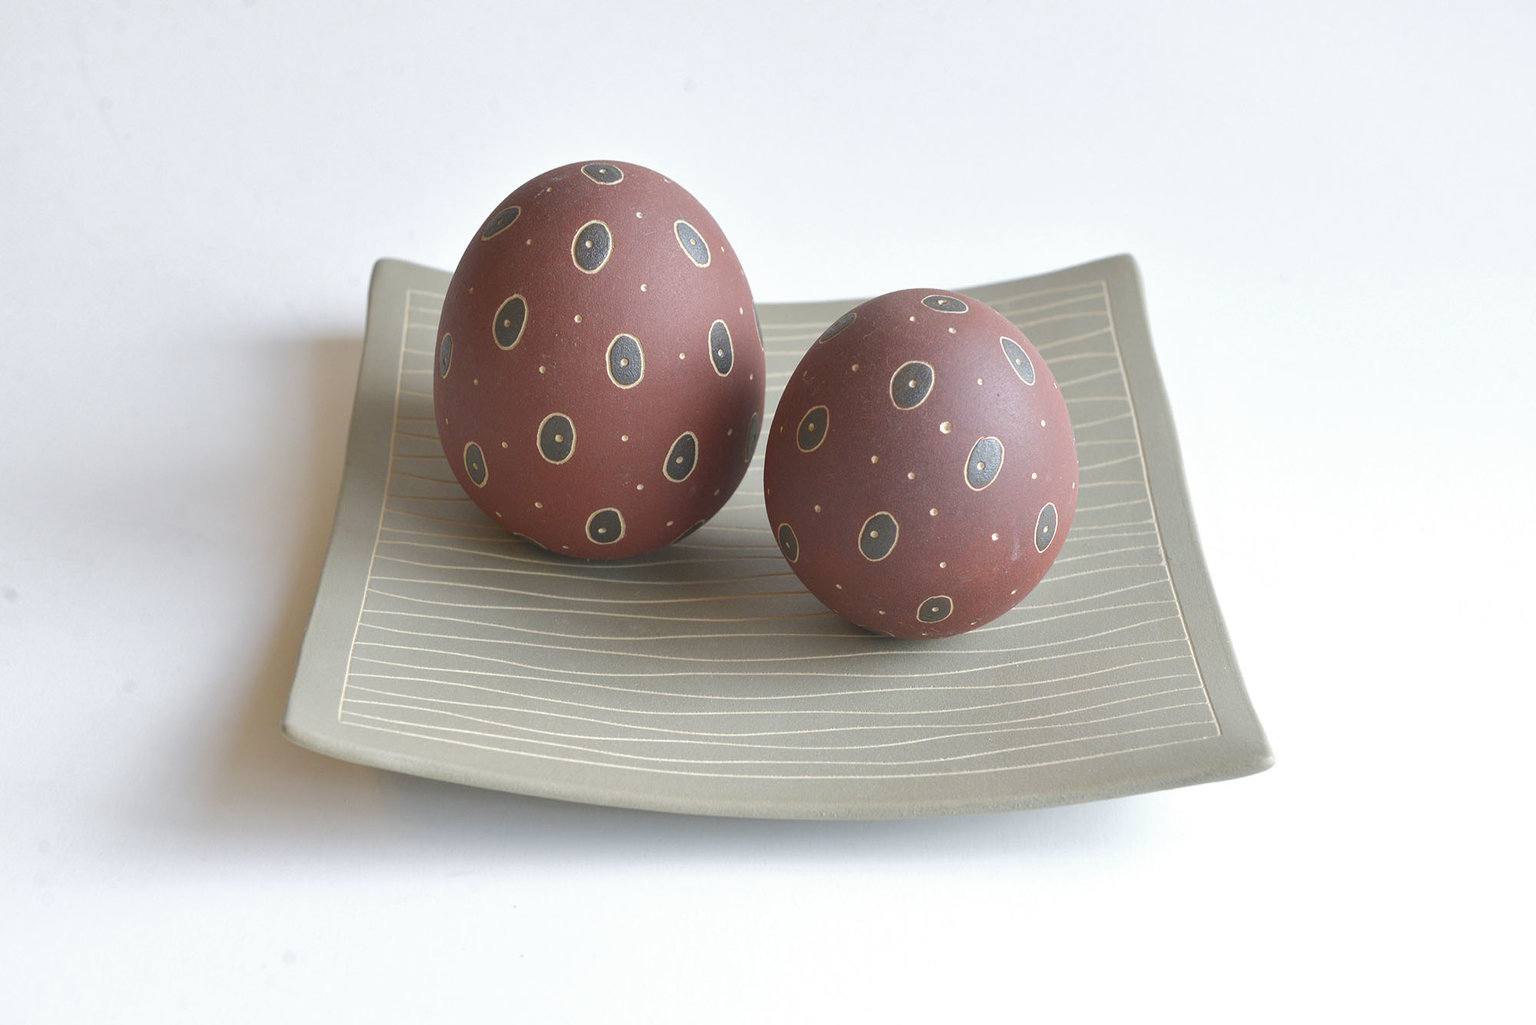 Ceramic platter with Easter eggs